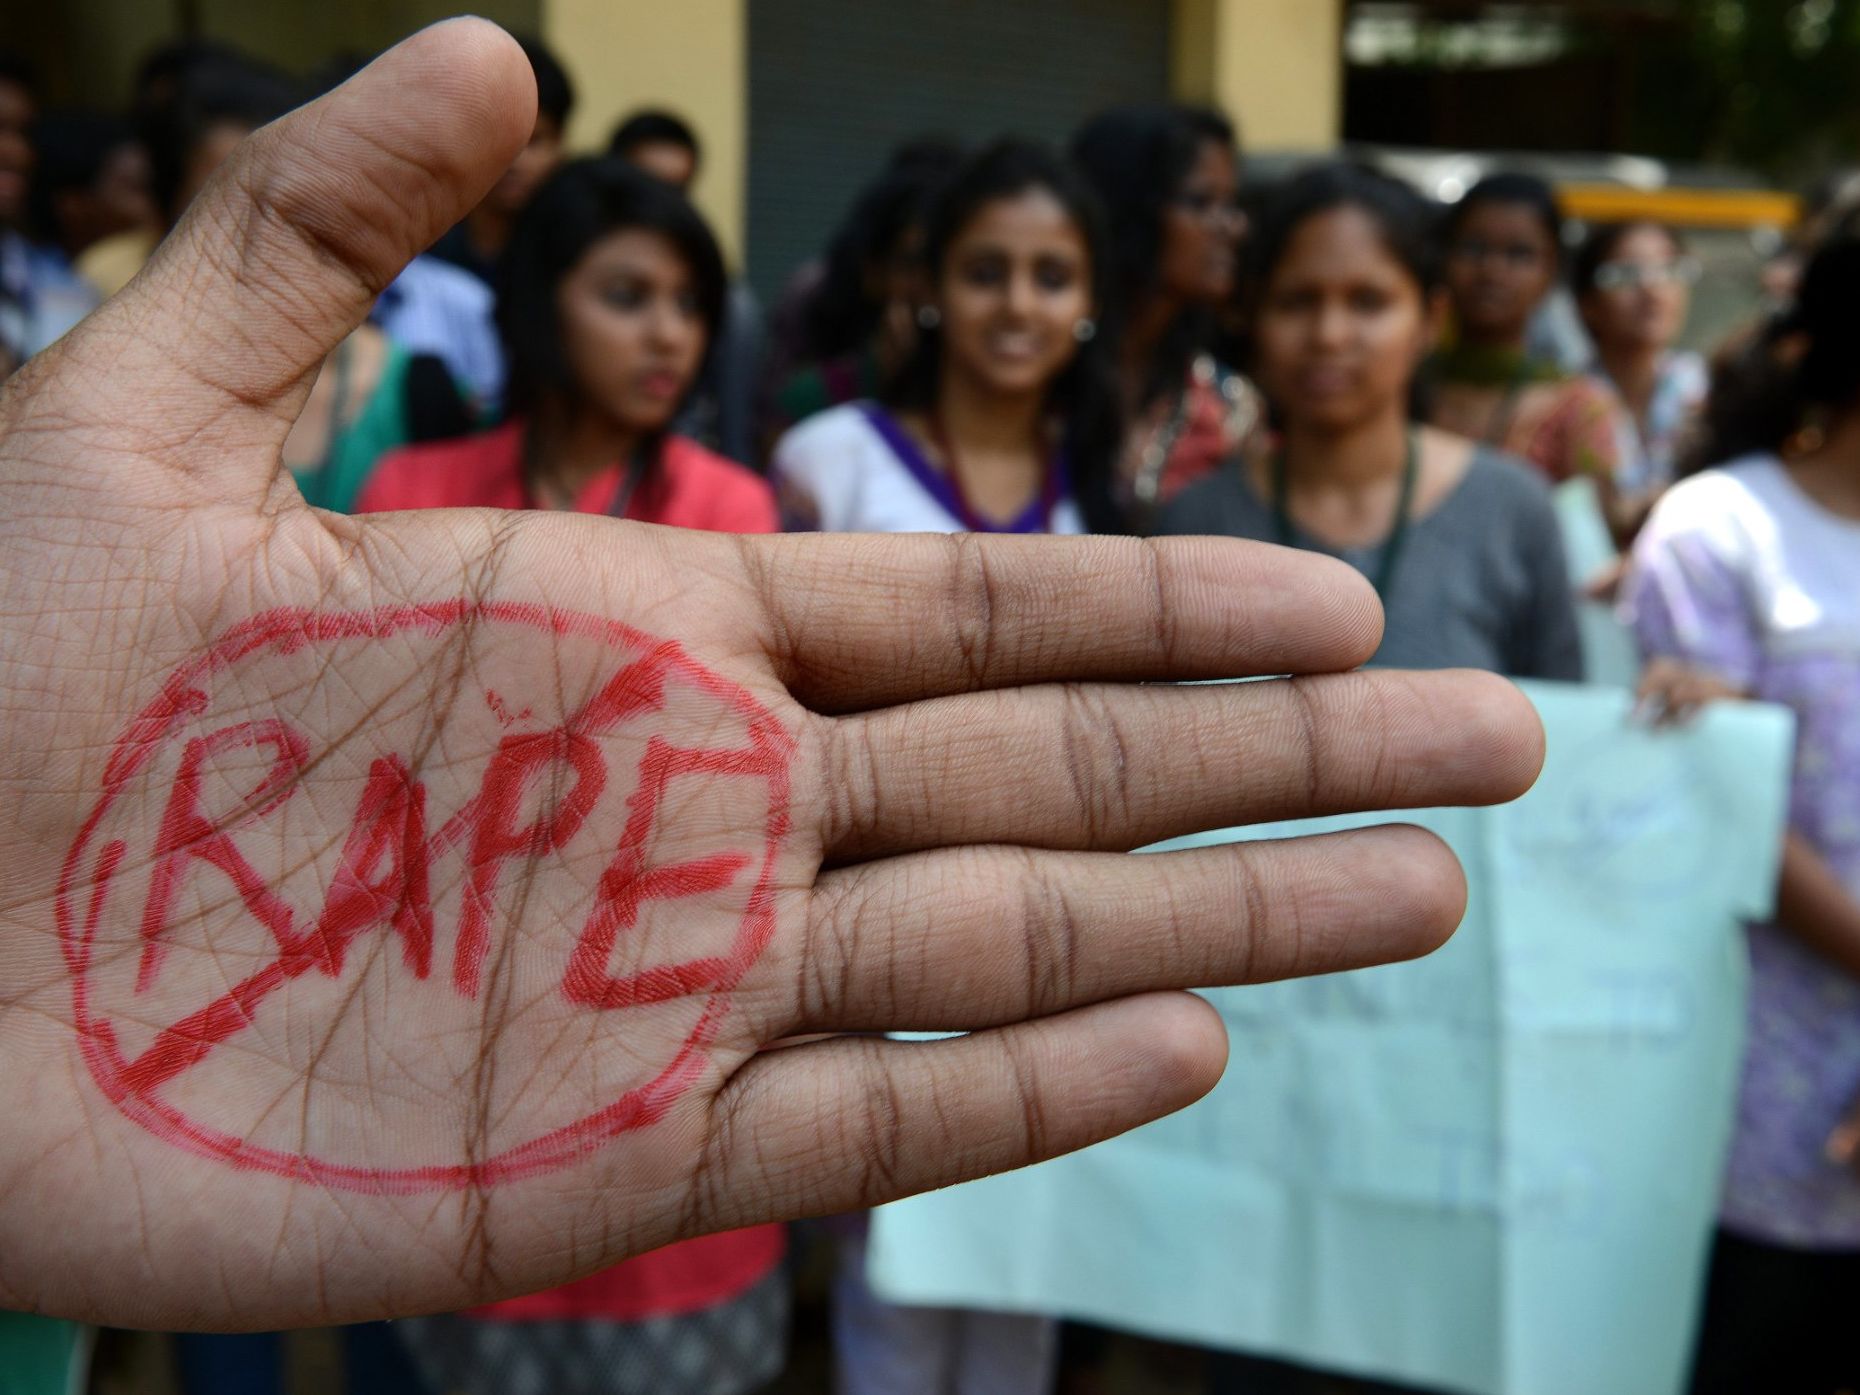 Jabardasti Ka Rape - Despite reforms, sexual assault survivors face systemic barriers in India |  CNN